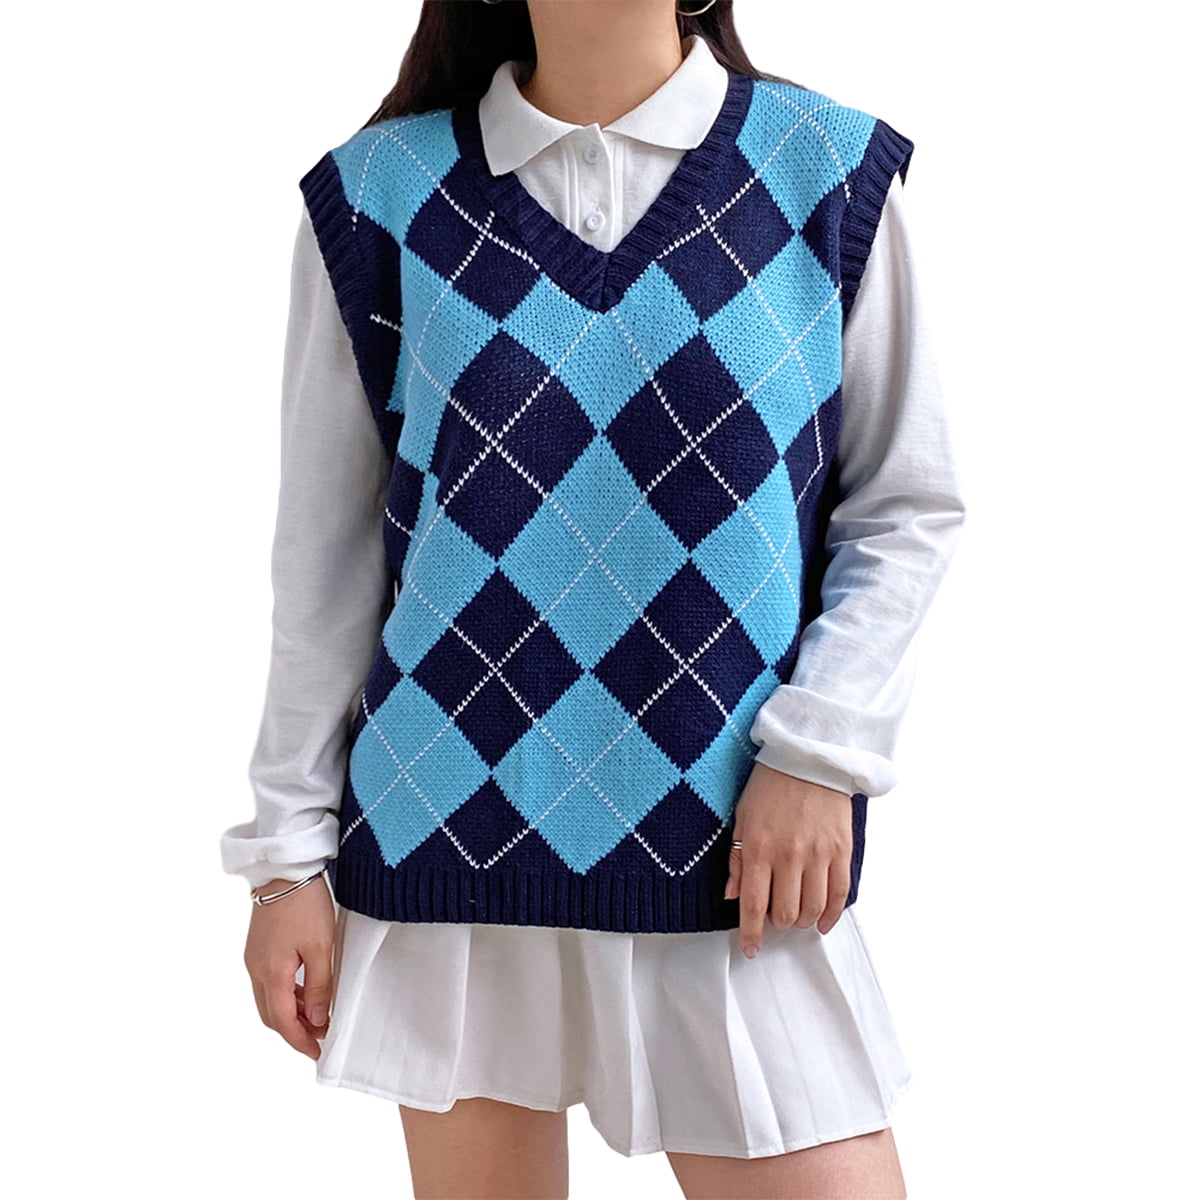 One opening Women Knit Sweater Vest Argyle Plaid E-Girls Preppy 